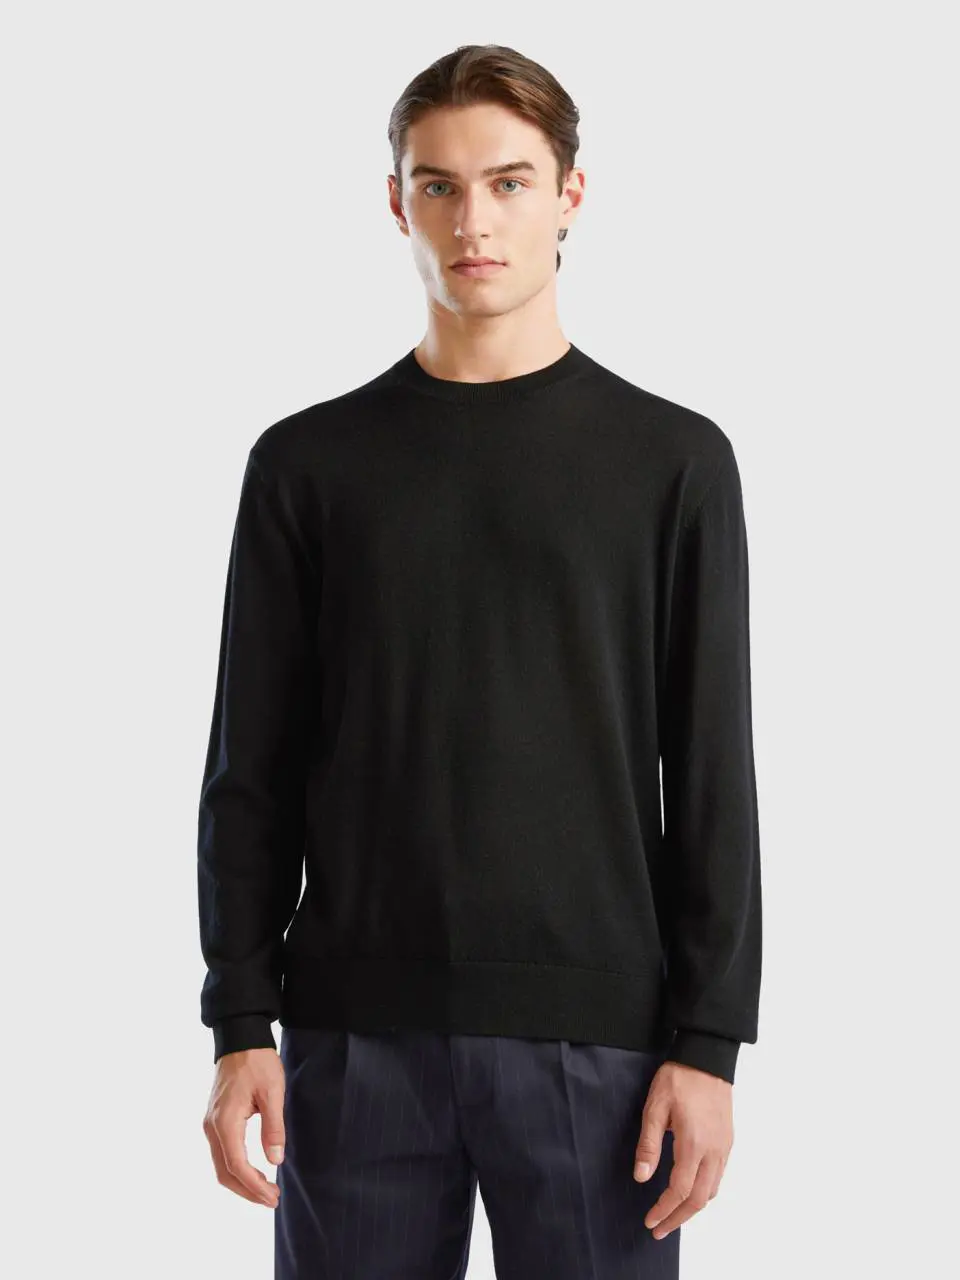 Benetton black sweater in pure merino wool. 1